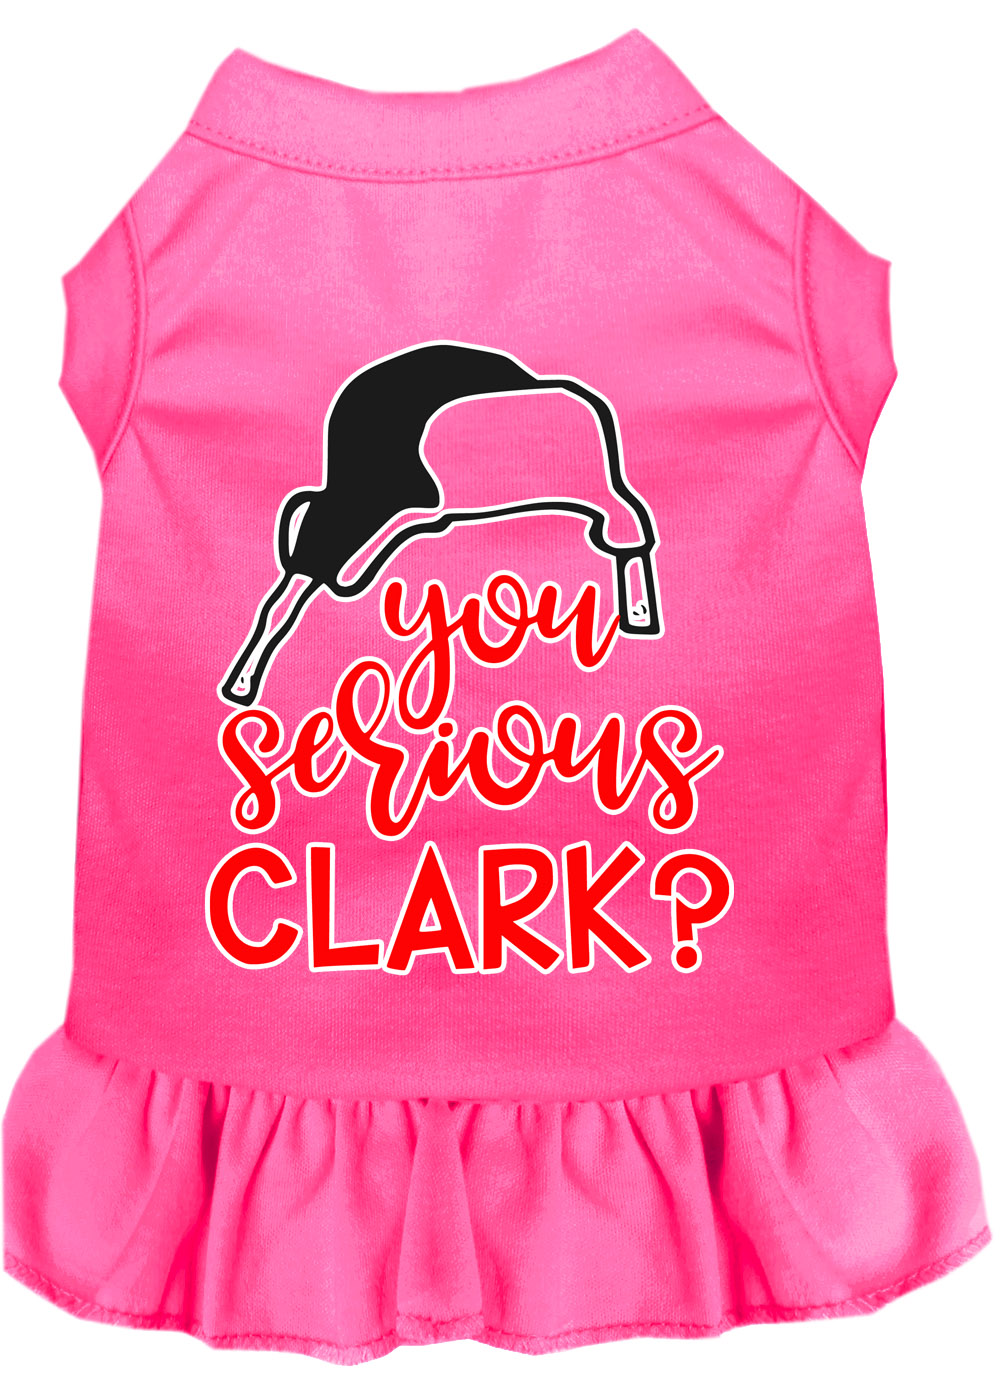 You Serious Clark? Screen Print Dog Dress Bright Pink Sm